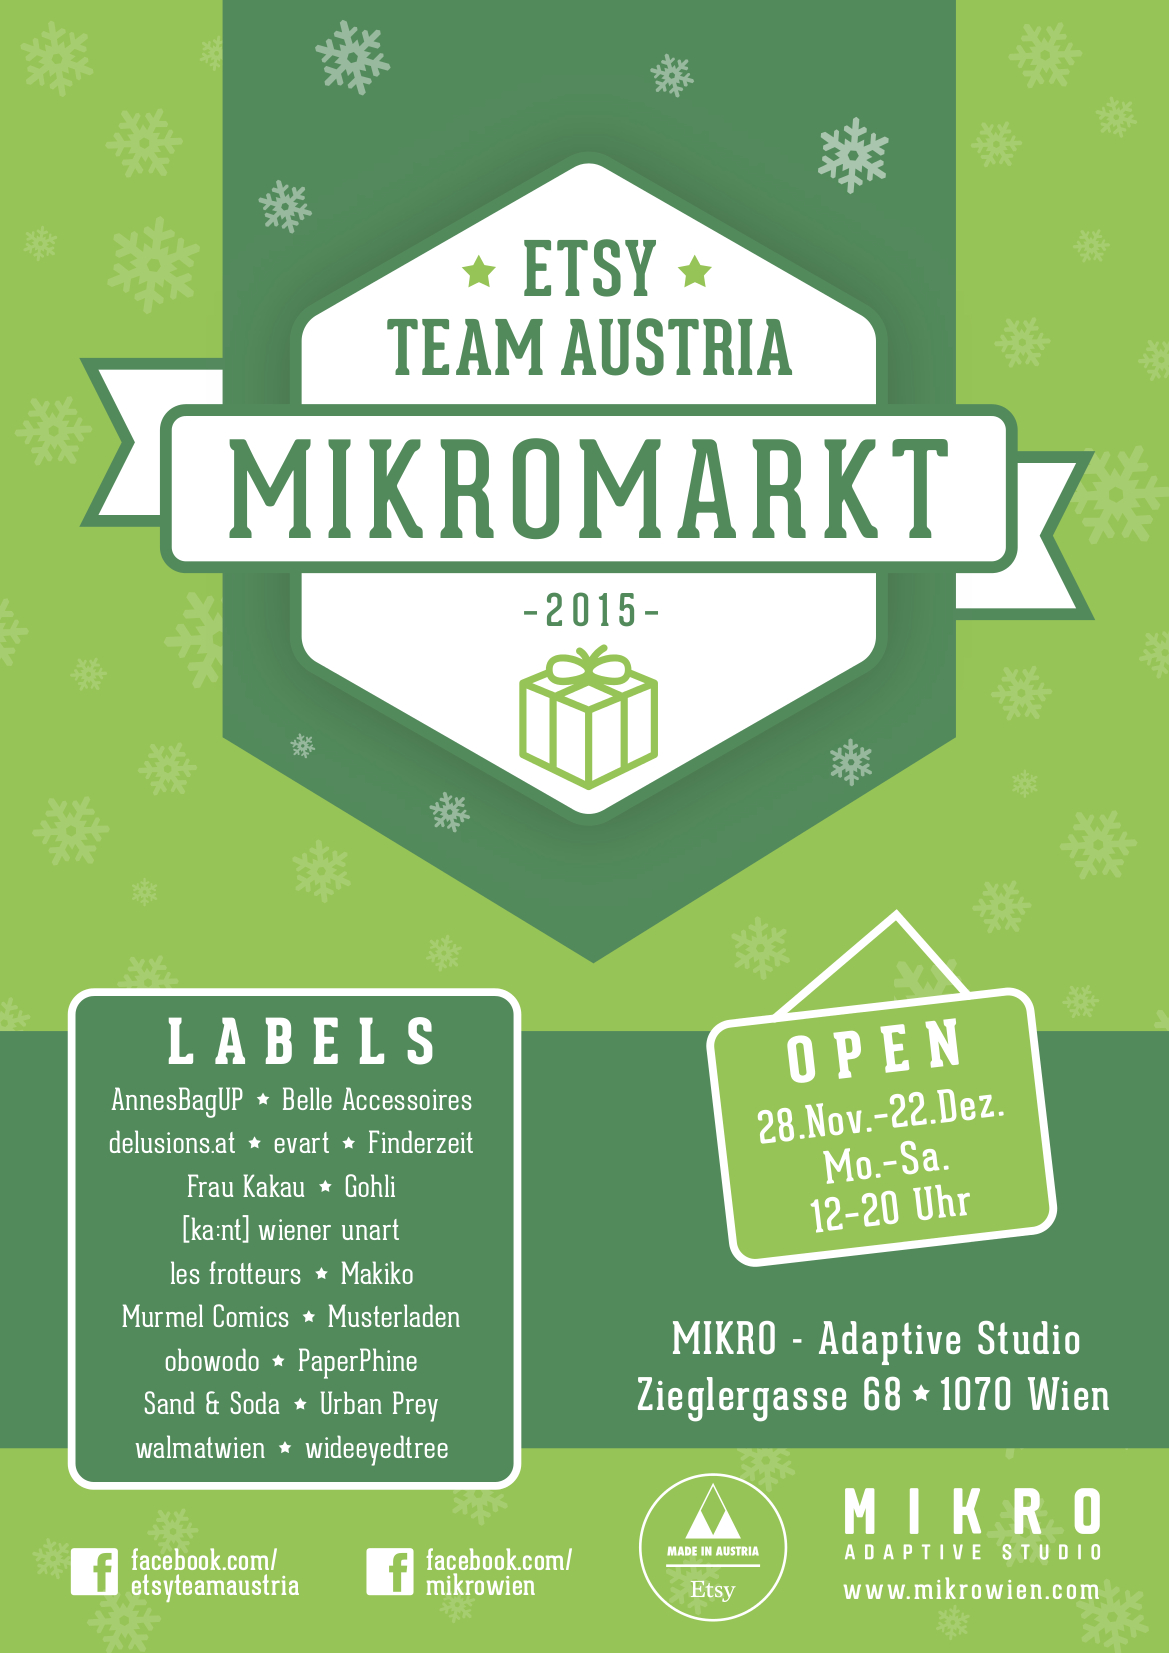 eta_mikromarkt_poster